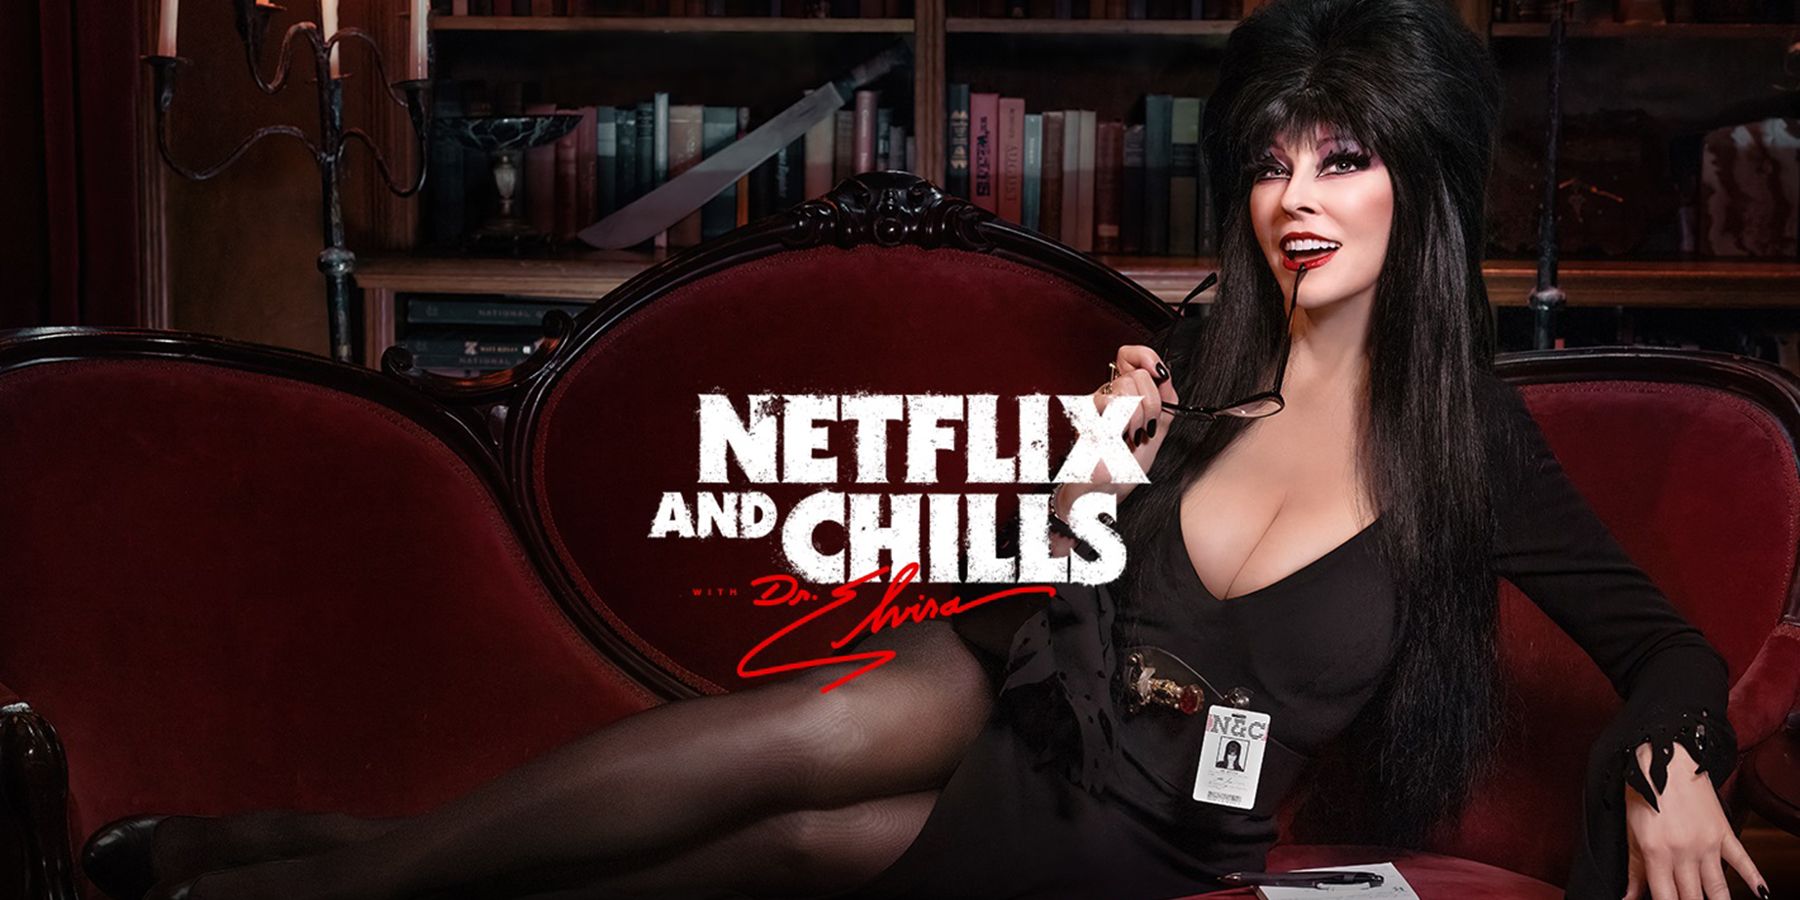 Elvira Explains The Health Benefits Of Horror Movies For Netflix